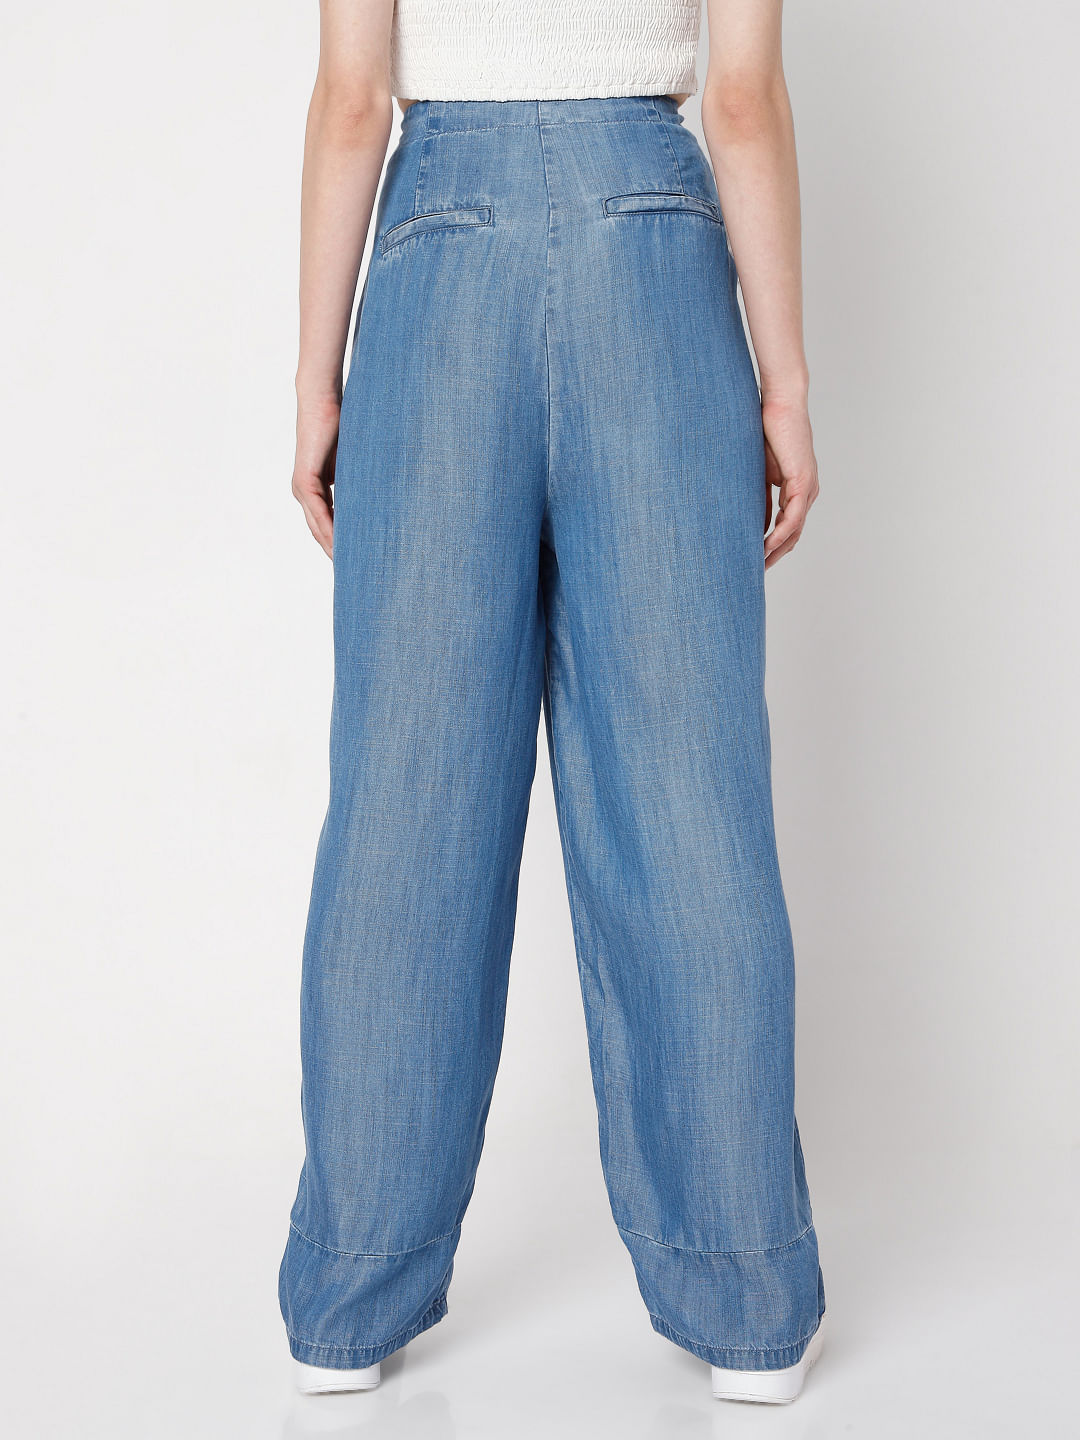 Rabatt 57 % Blau 38 Vero Moda Flared jeans DAMEN Jeans Flared jeans Destroyed 